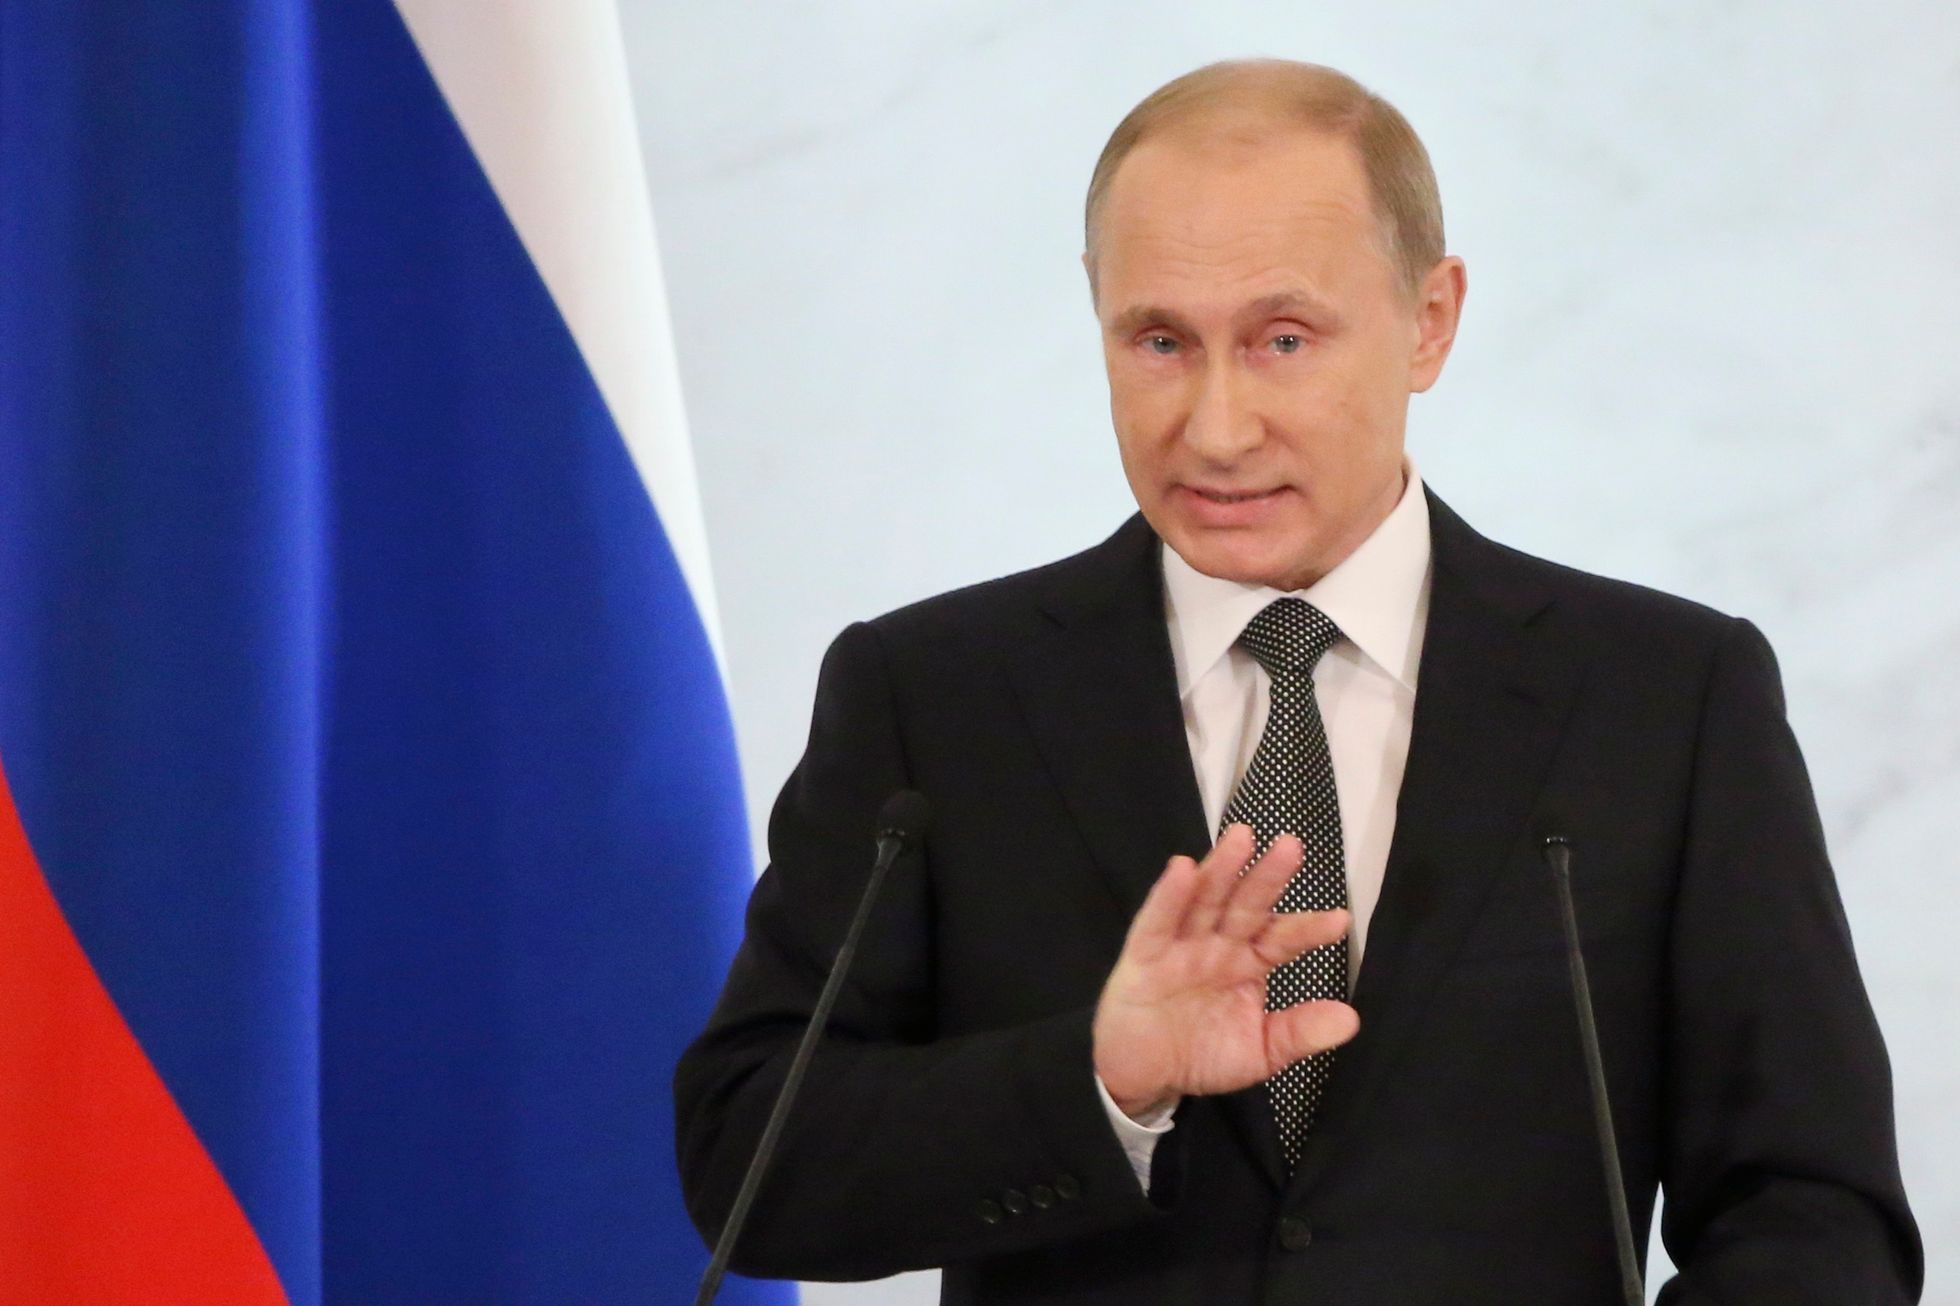 Russia's President Putin projev k poslancům o stavu federace